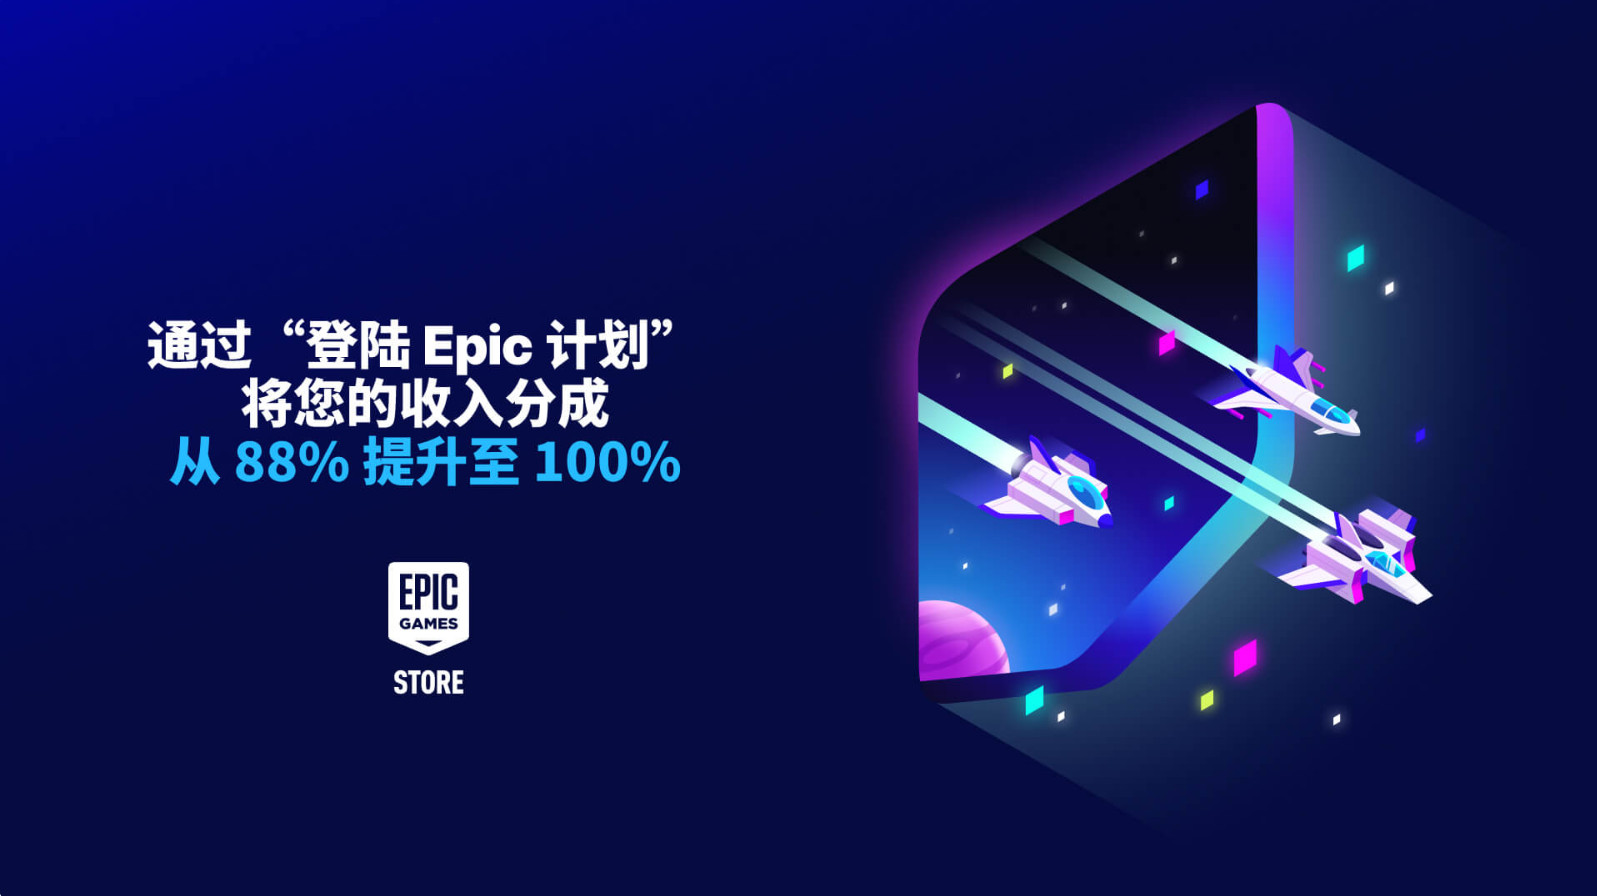 Epic又推新政策“Epic始发”：携老游戏回归 前六个月获100%收入分成